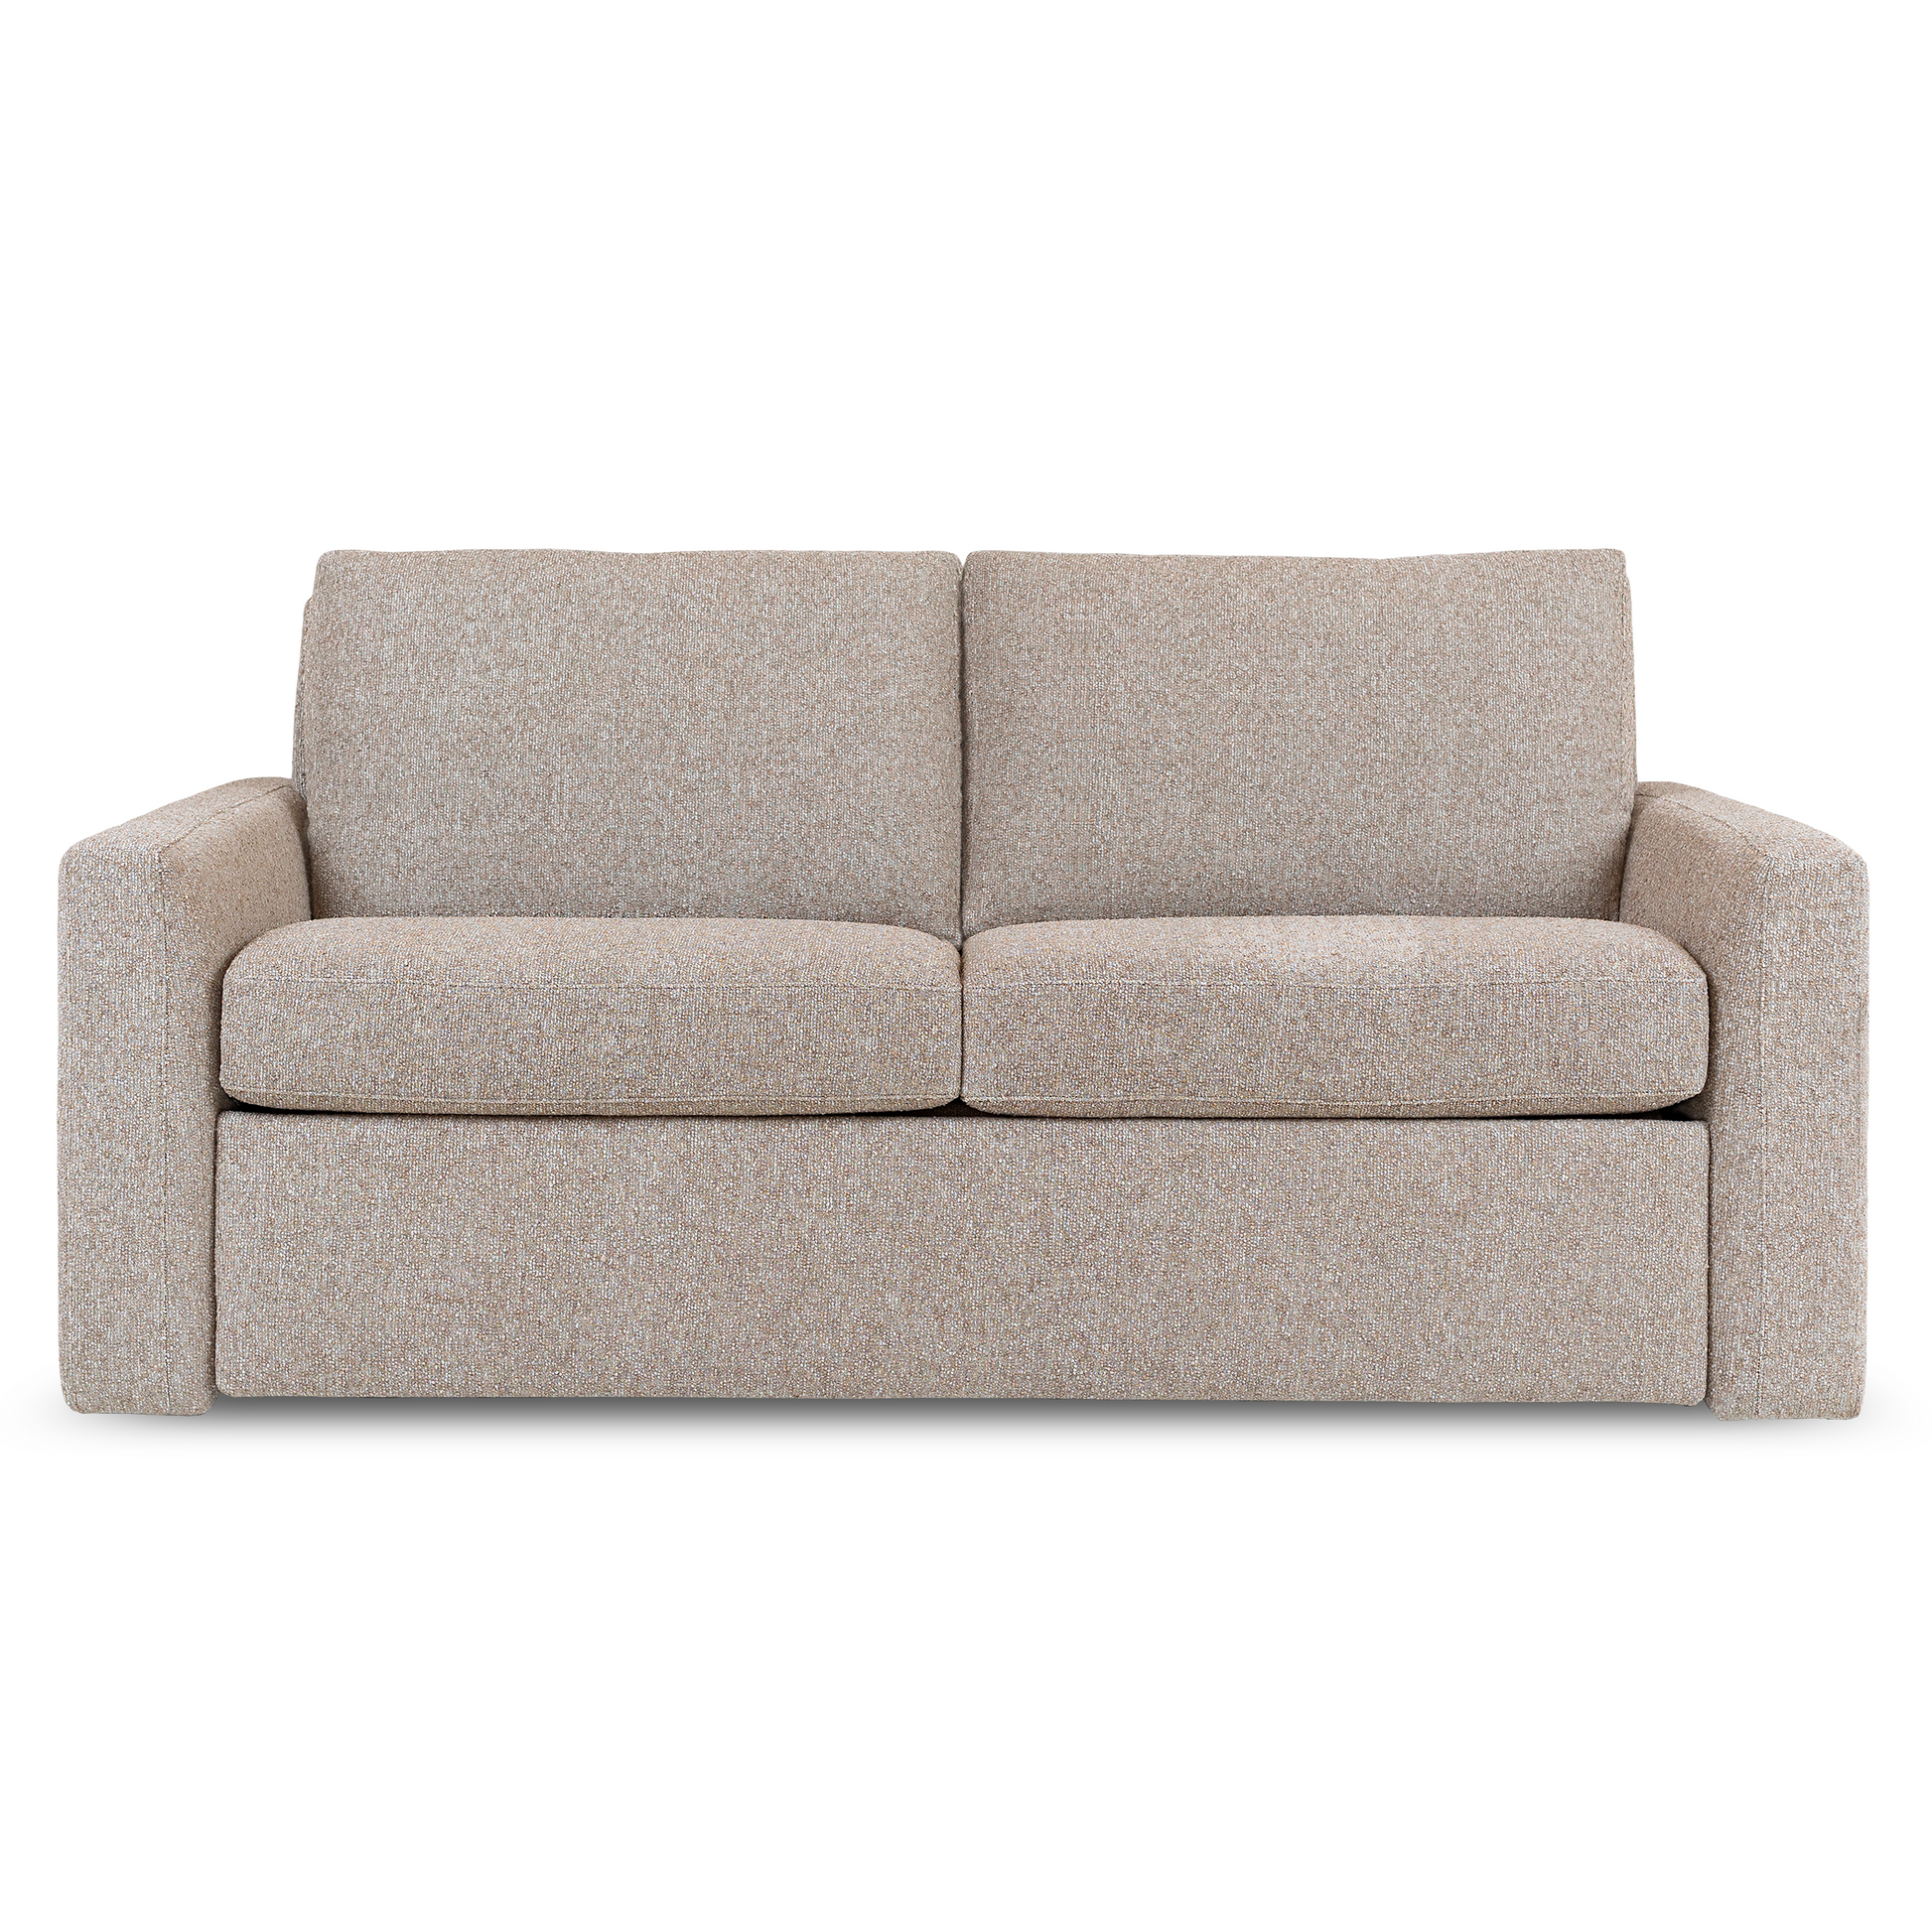 American Leather Comfort Sleeper - Clara - Best Sofa Sleeper